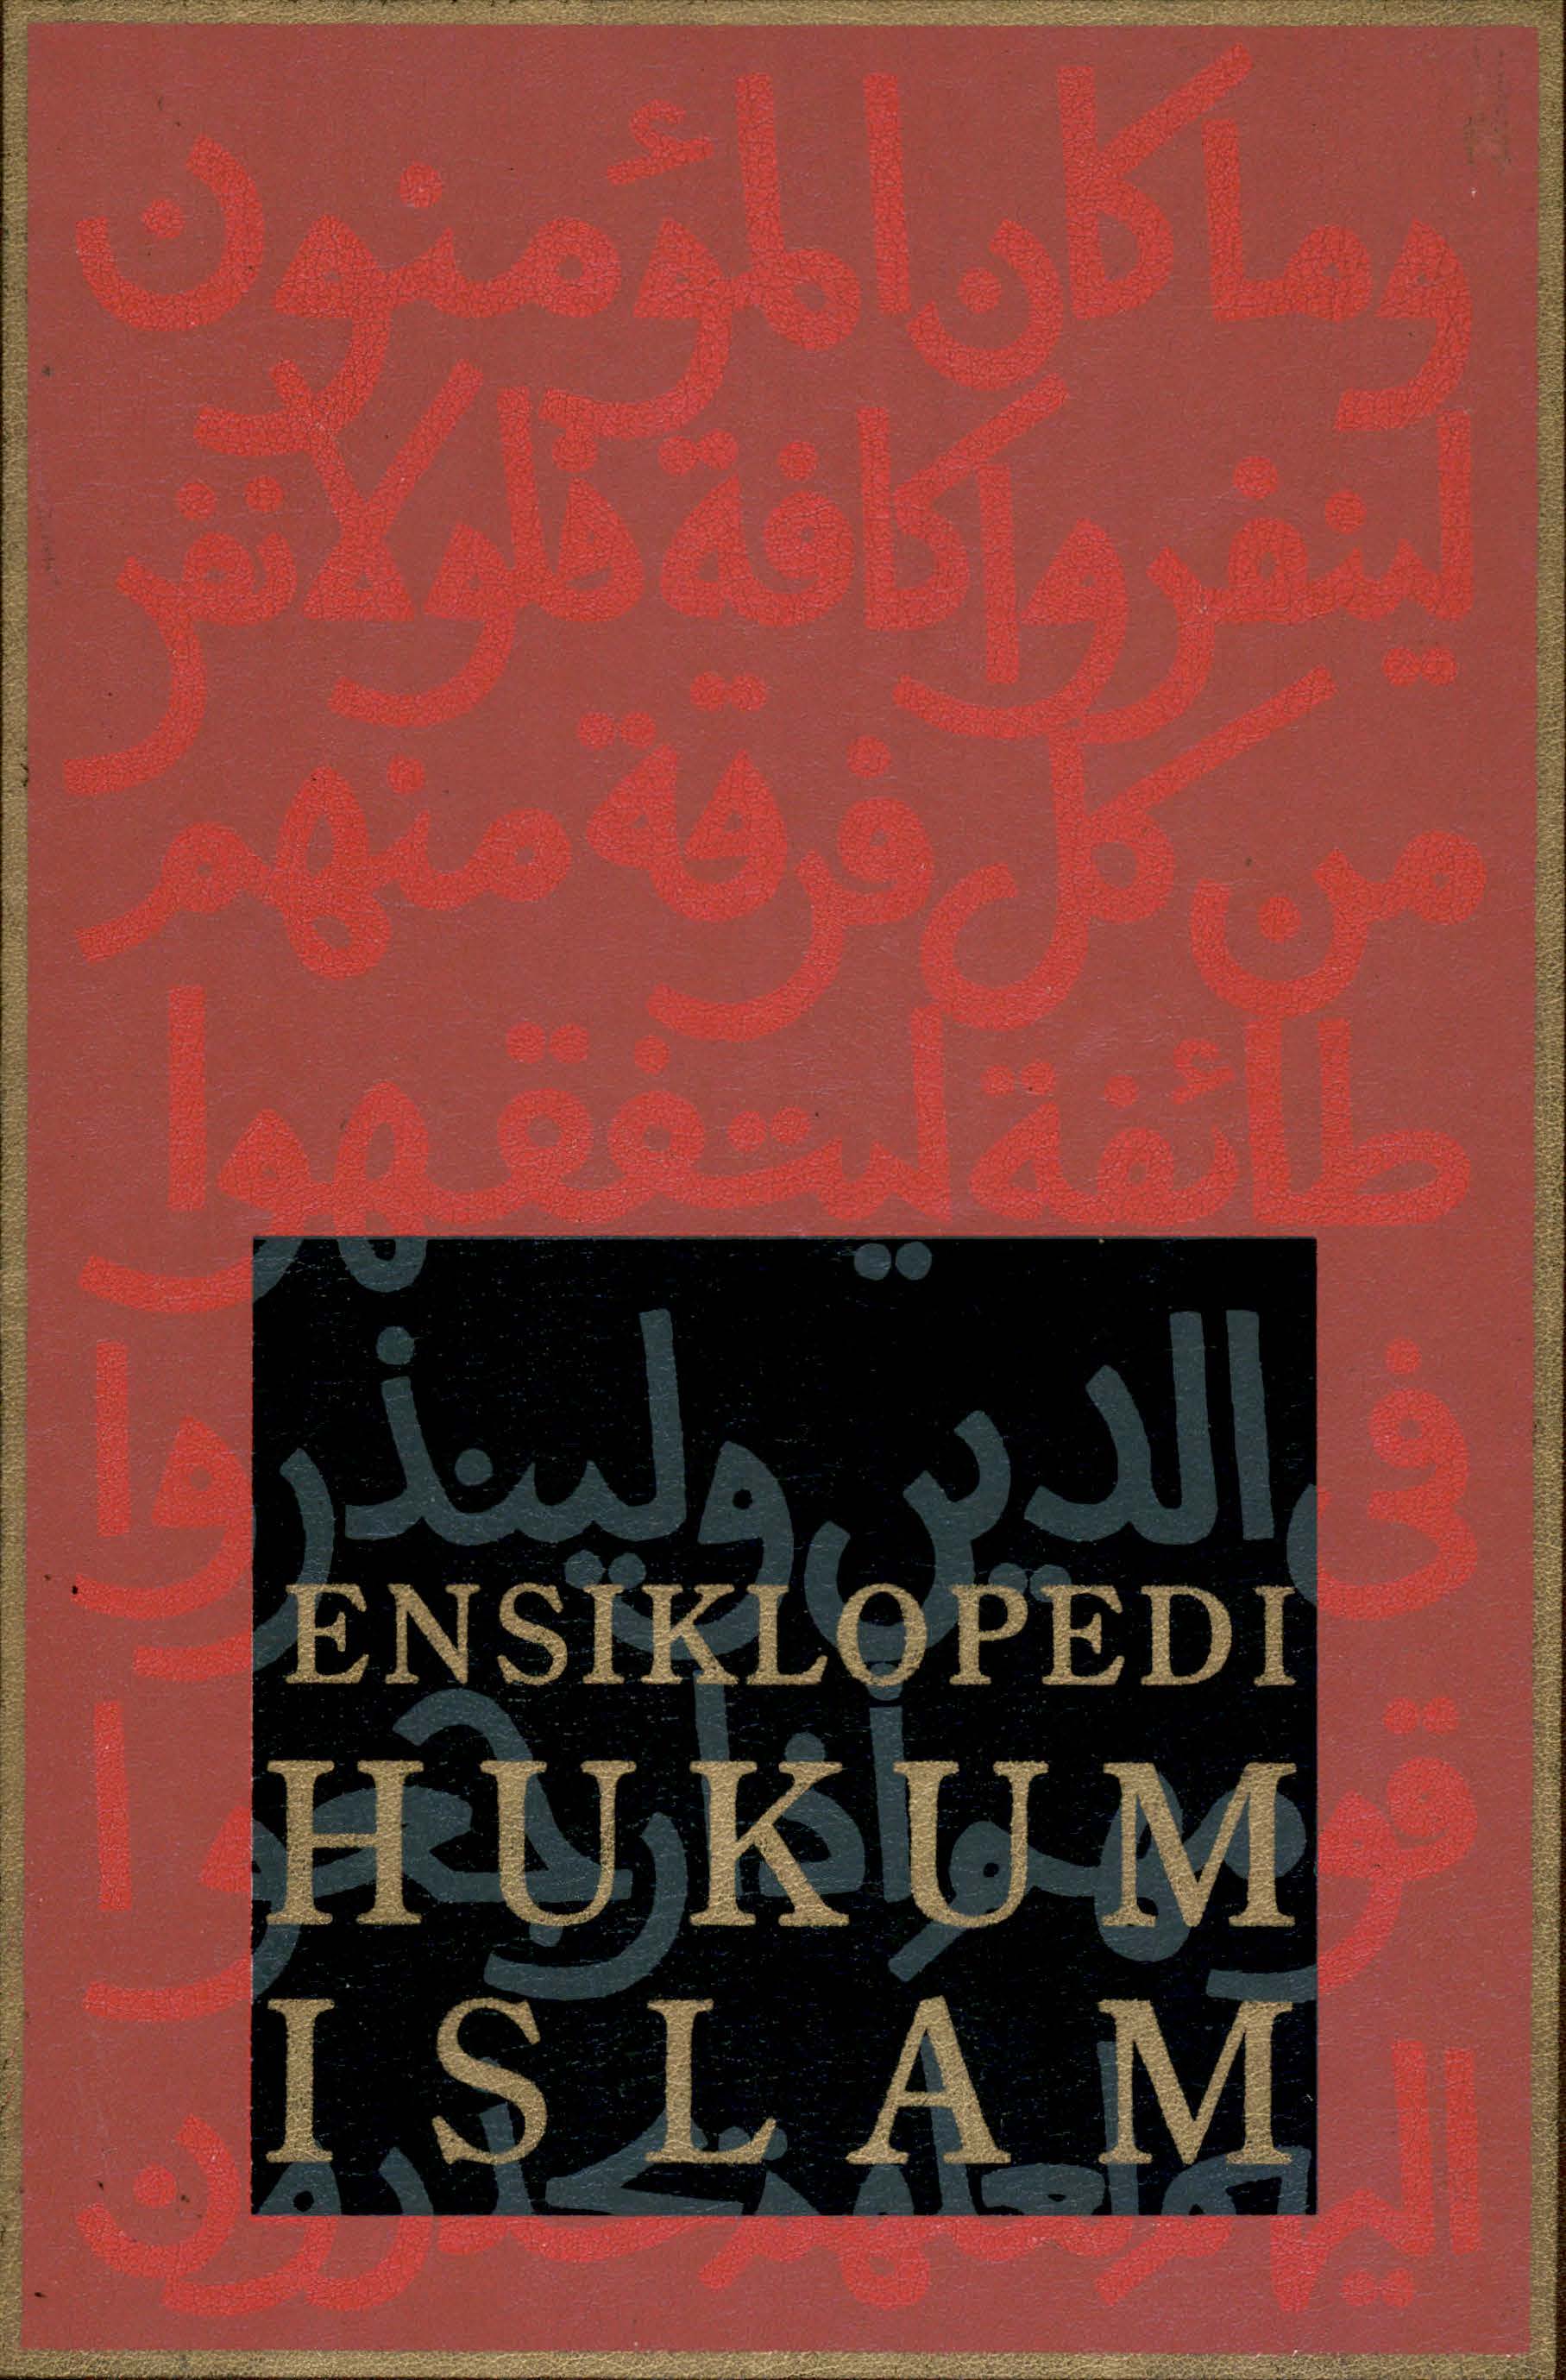 Ensiklopedi hukum islam : vol. 1 abd - fik